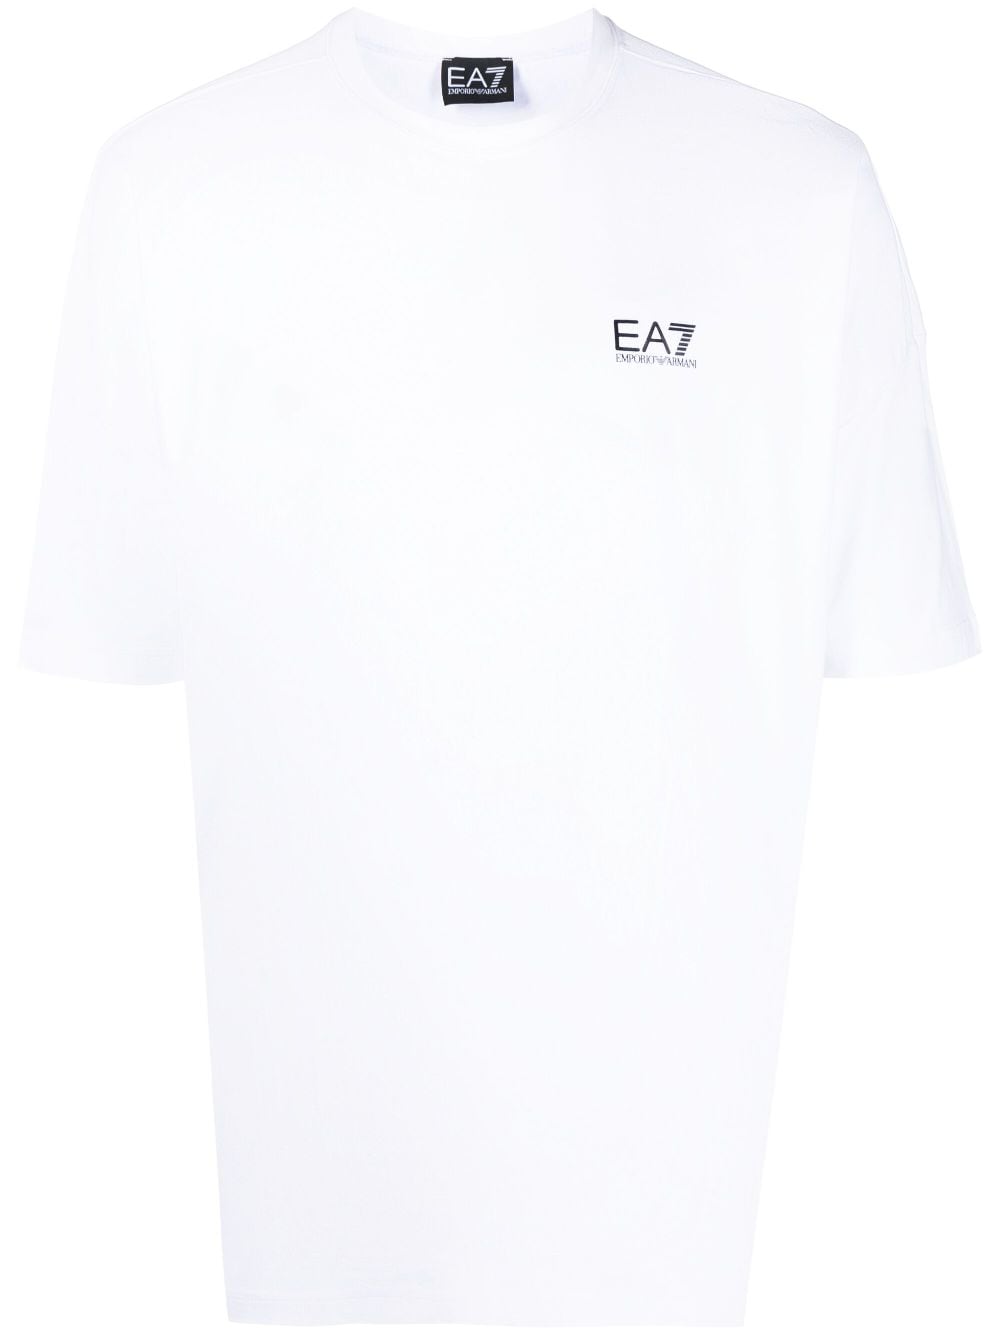 Ea7 Emporio Armani logo print T-shirt